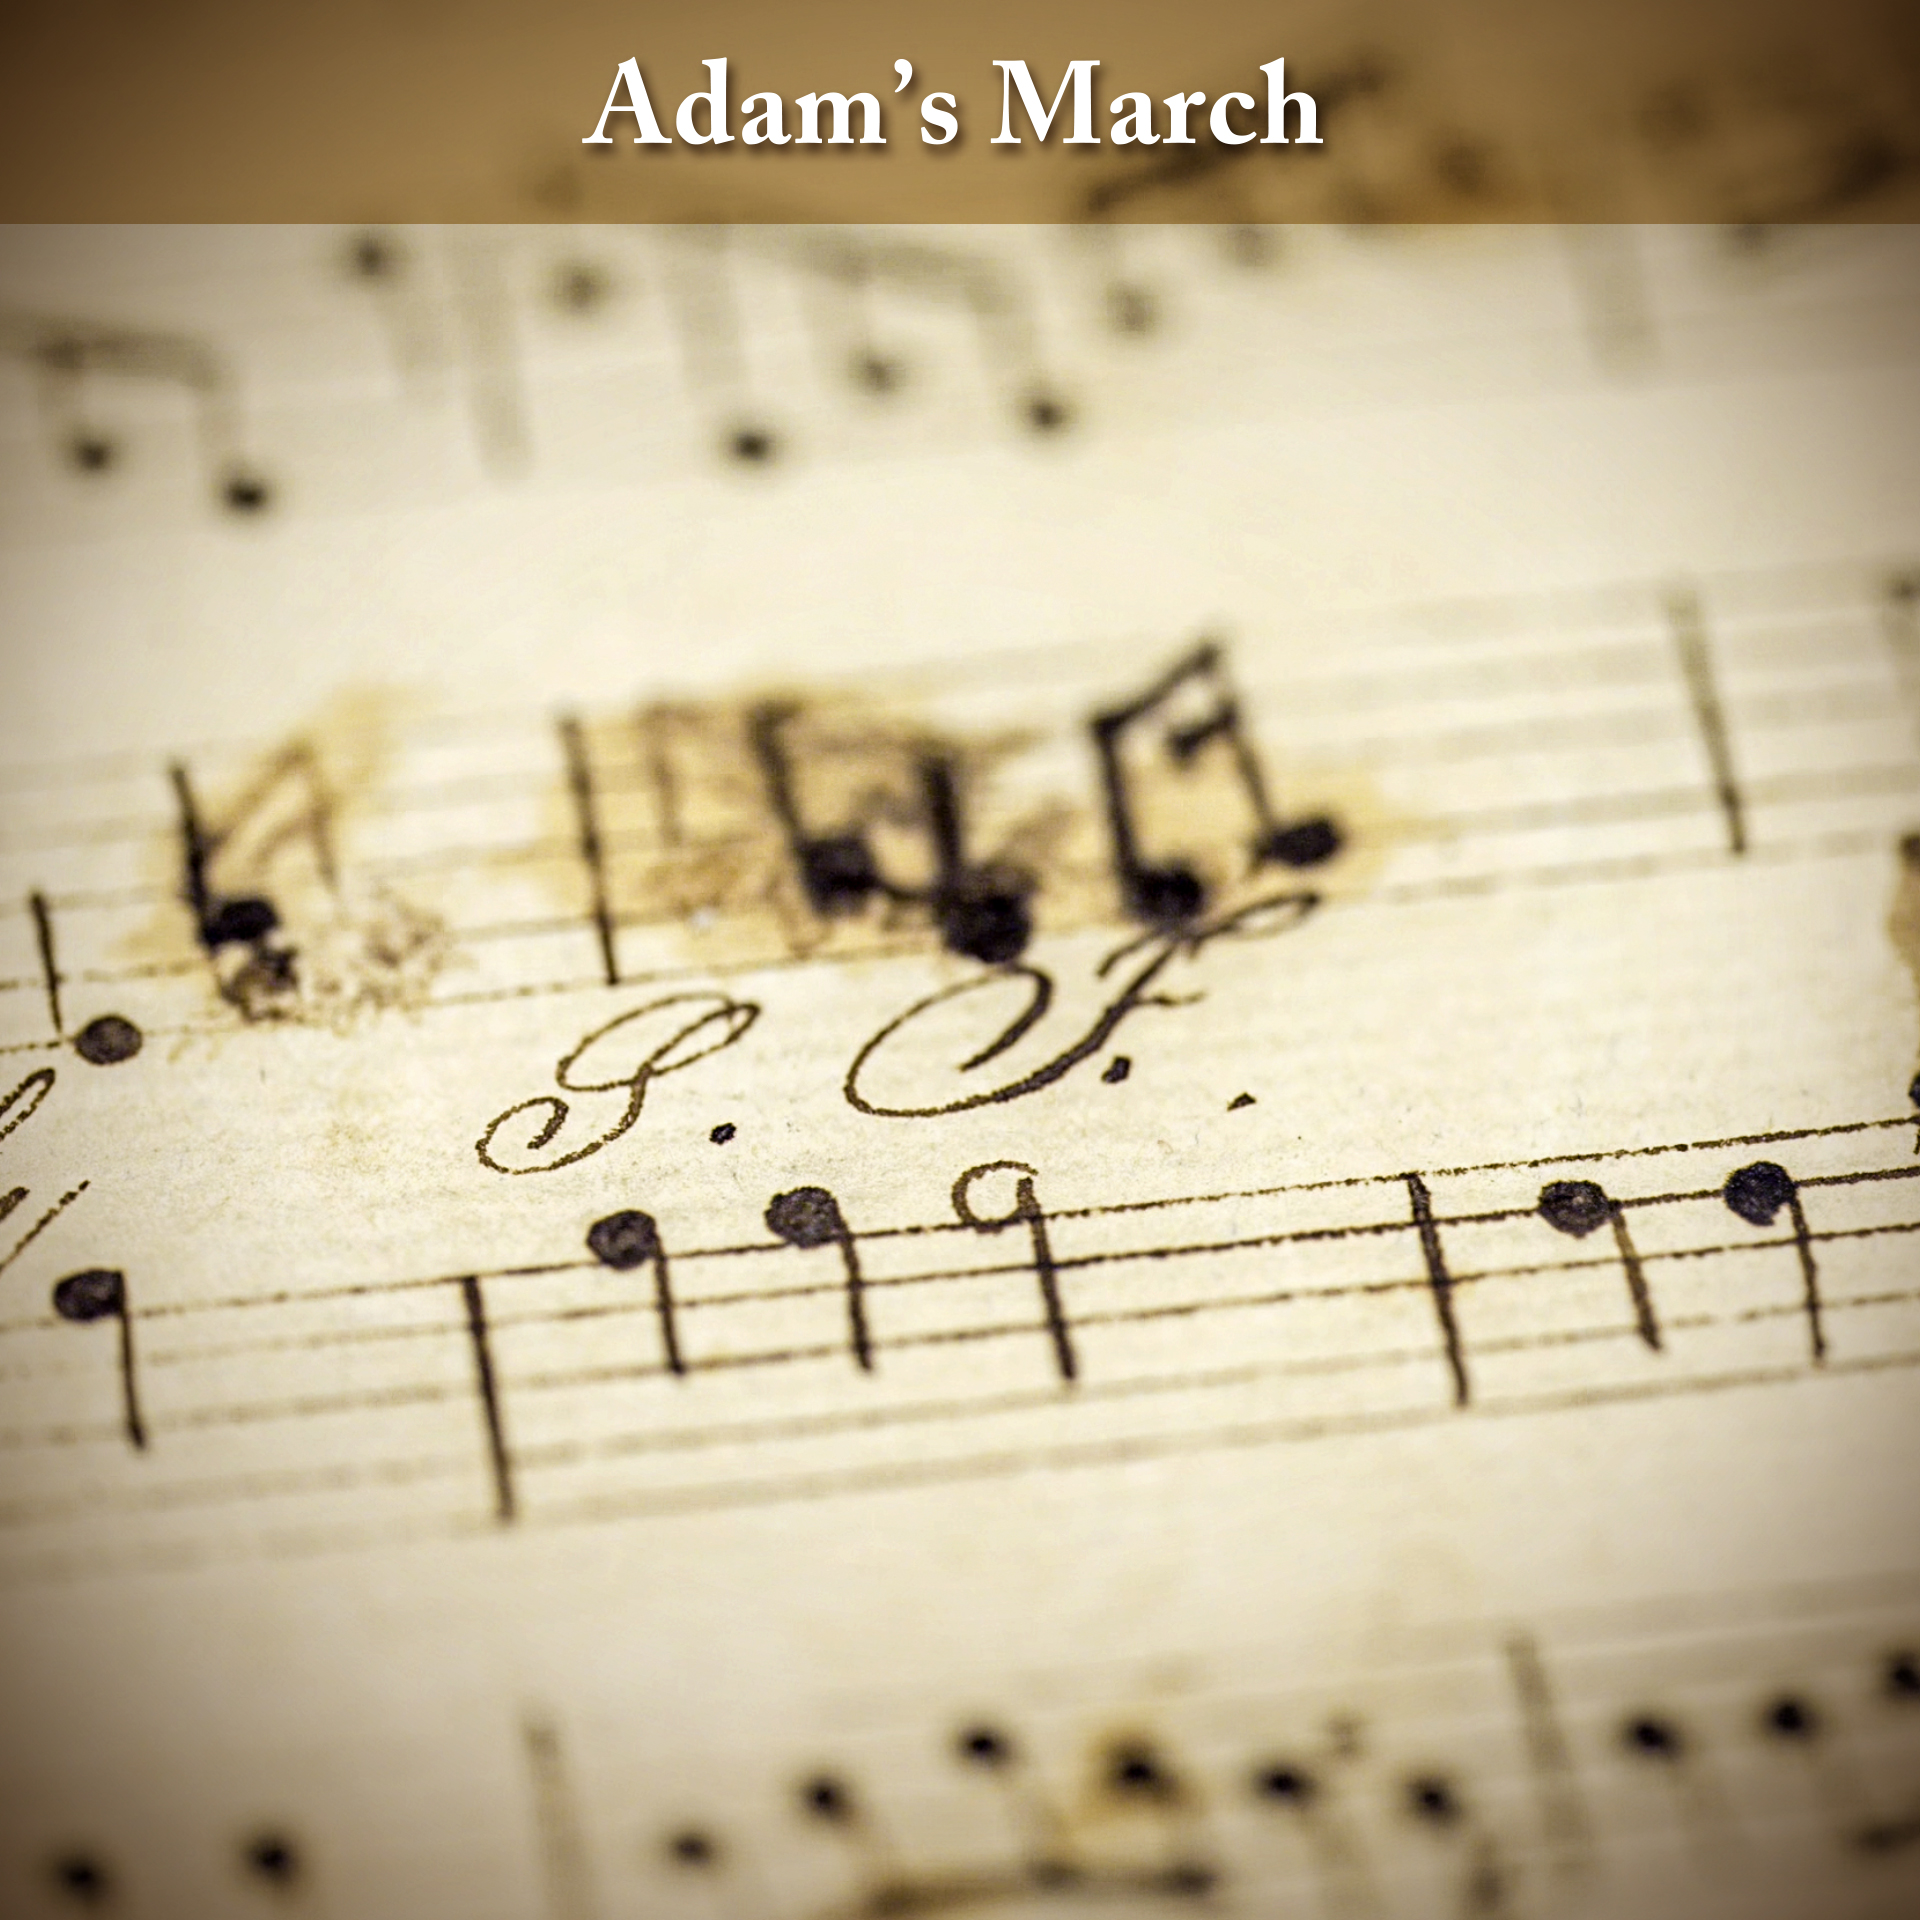 BONUS: The Music of Sawney Freeman "Adam's March"